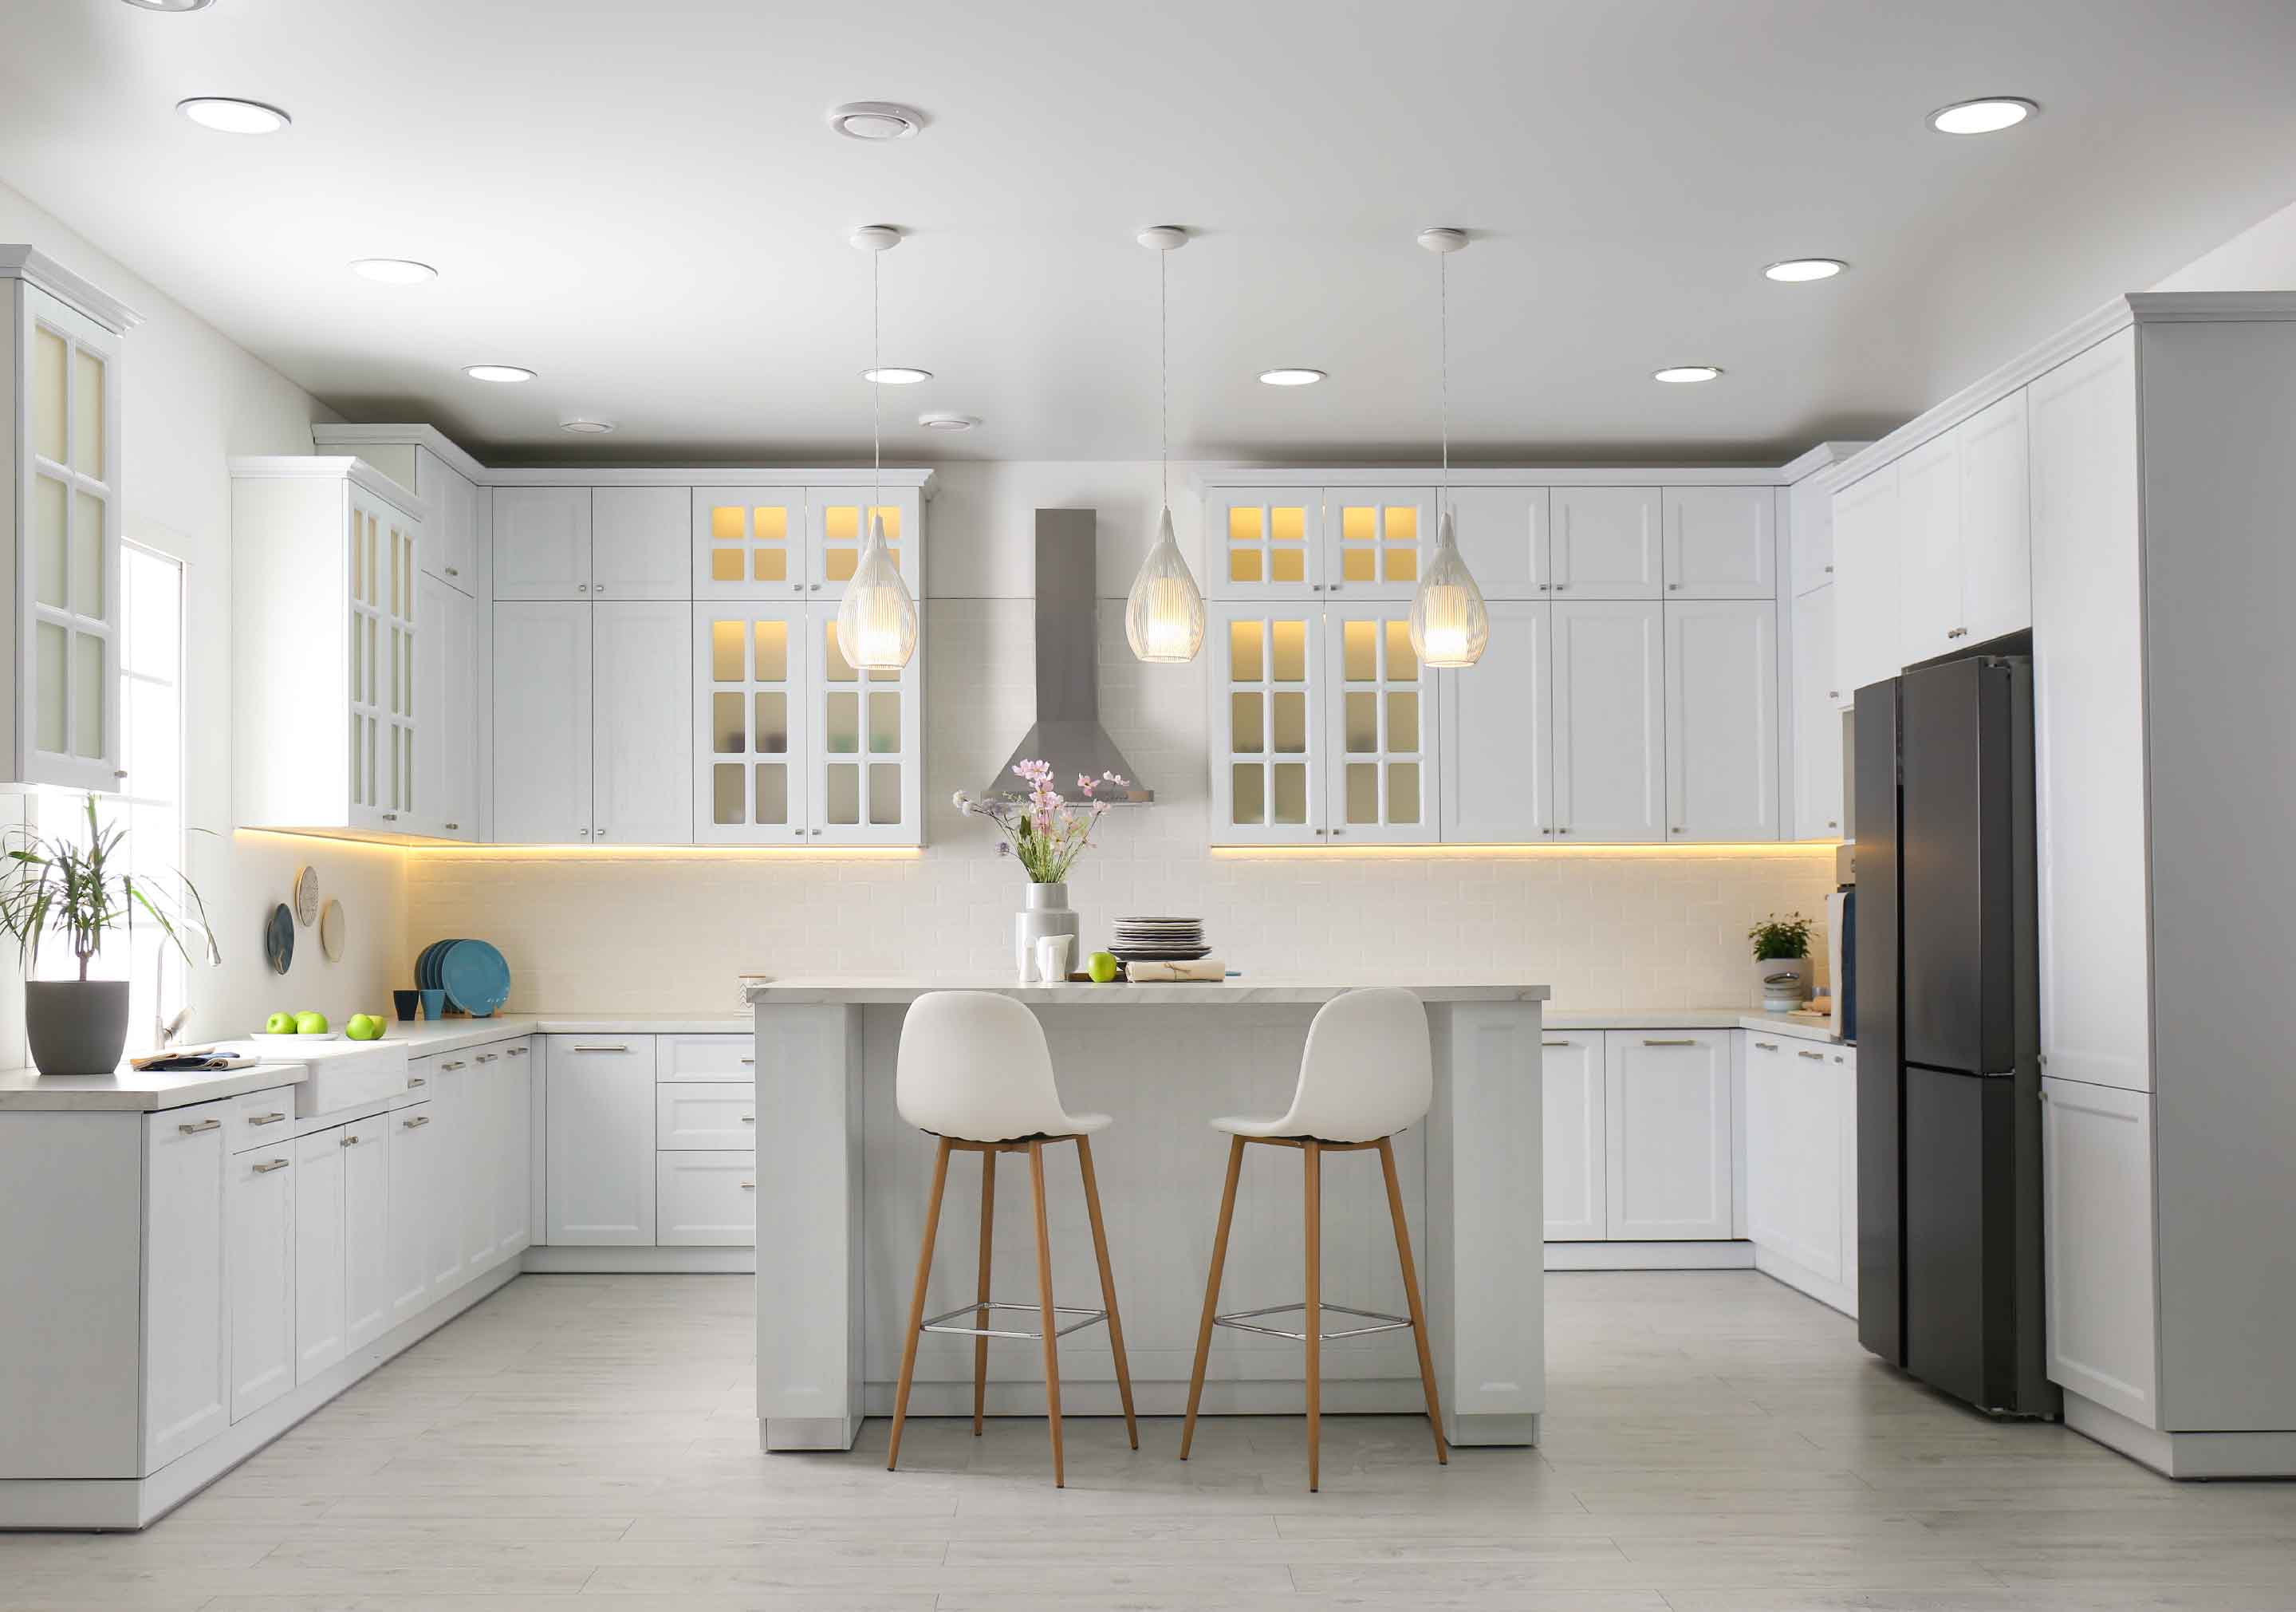 kitchen lighting ideas - with white interiors